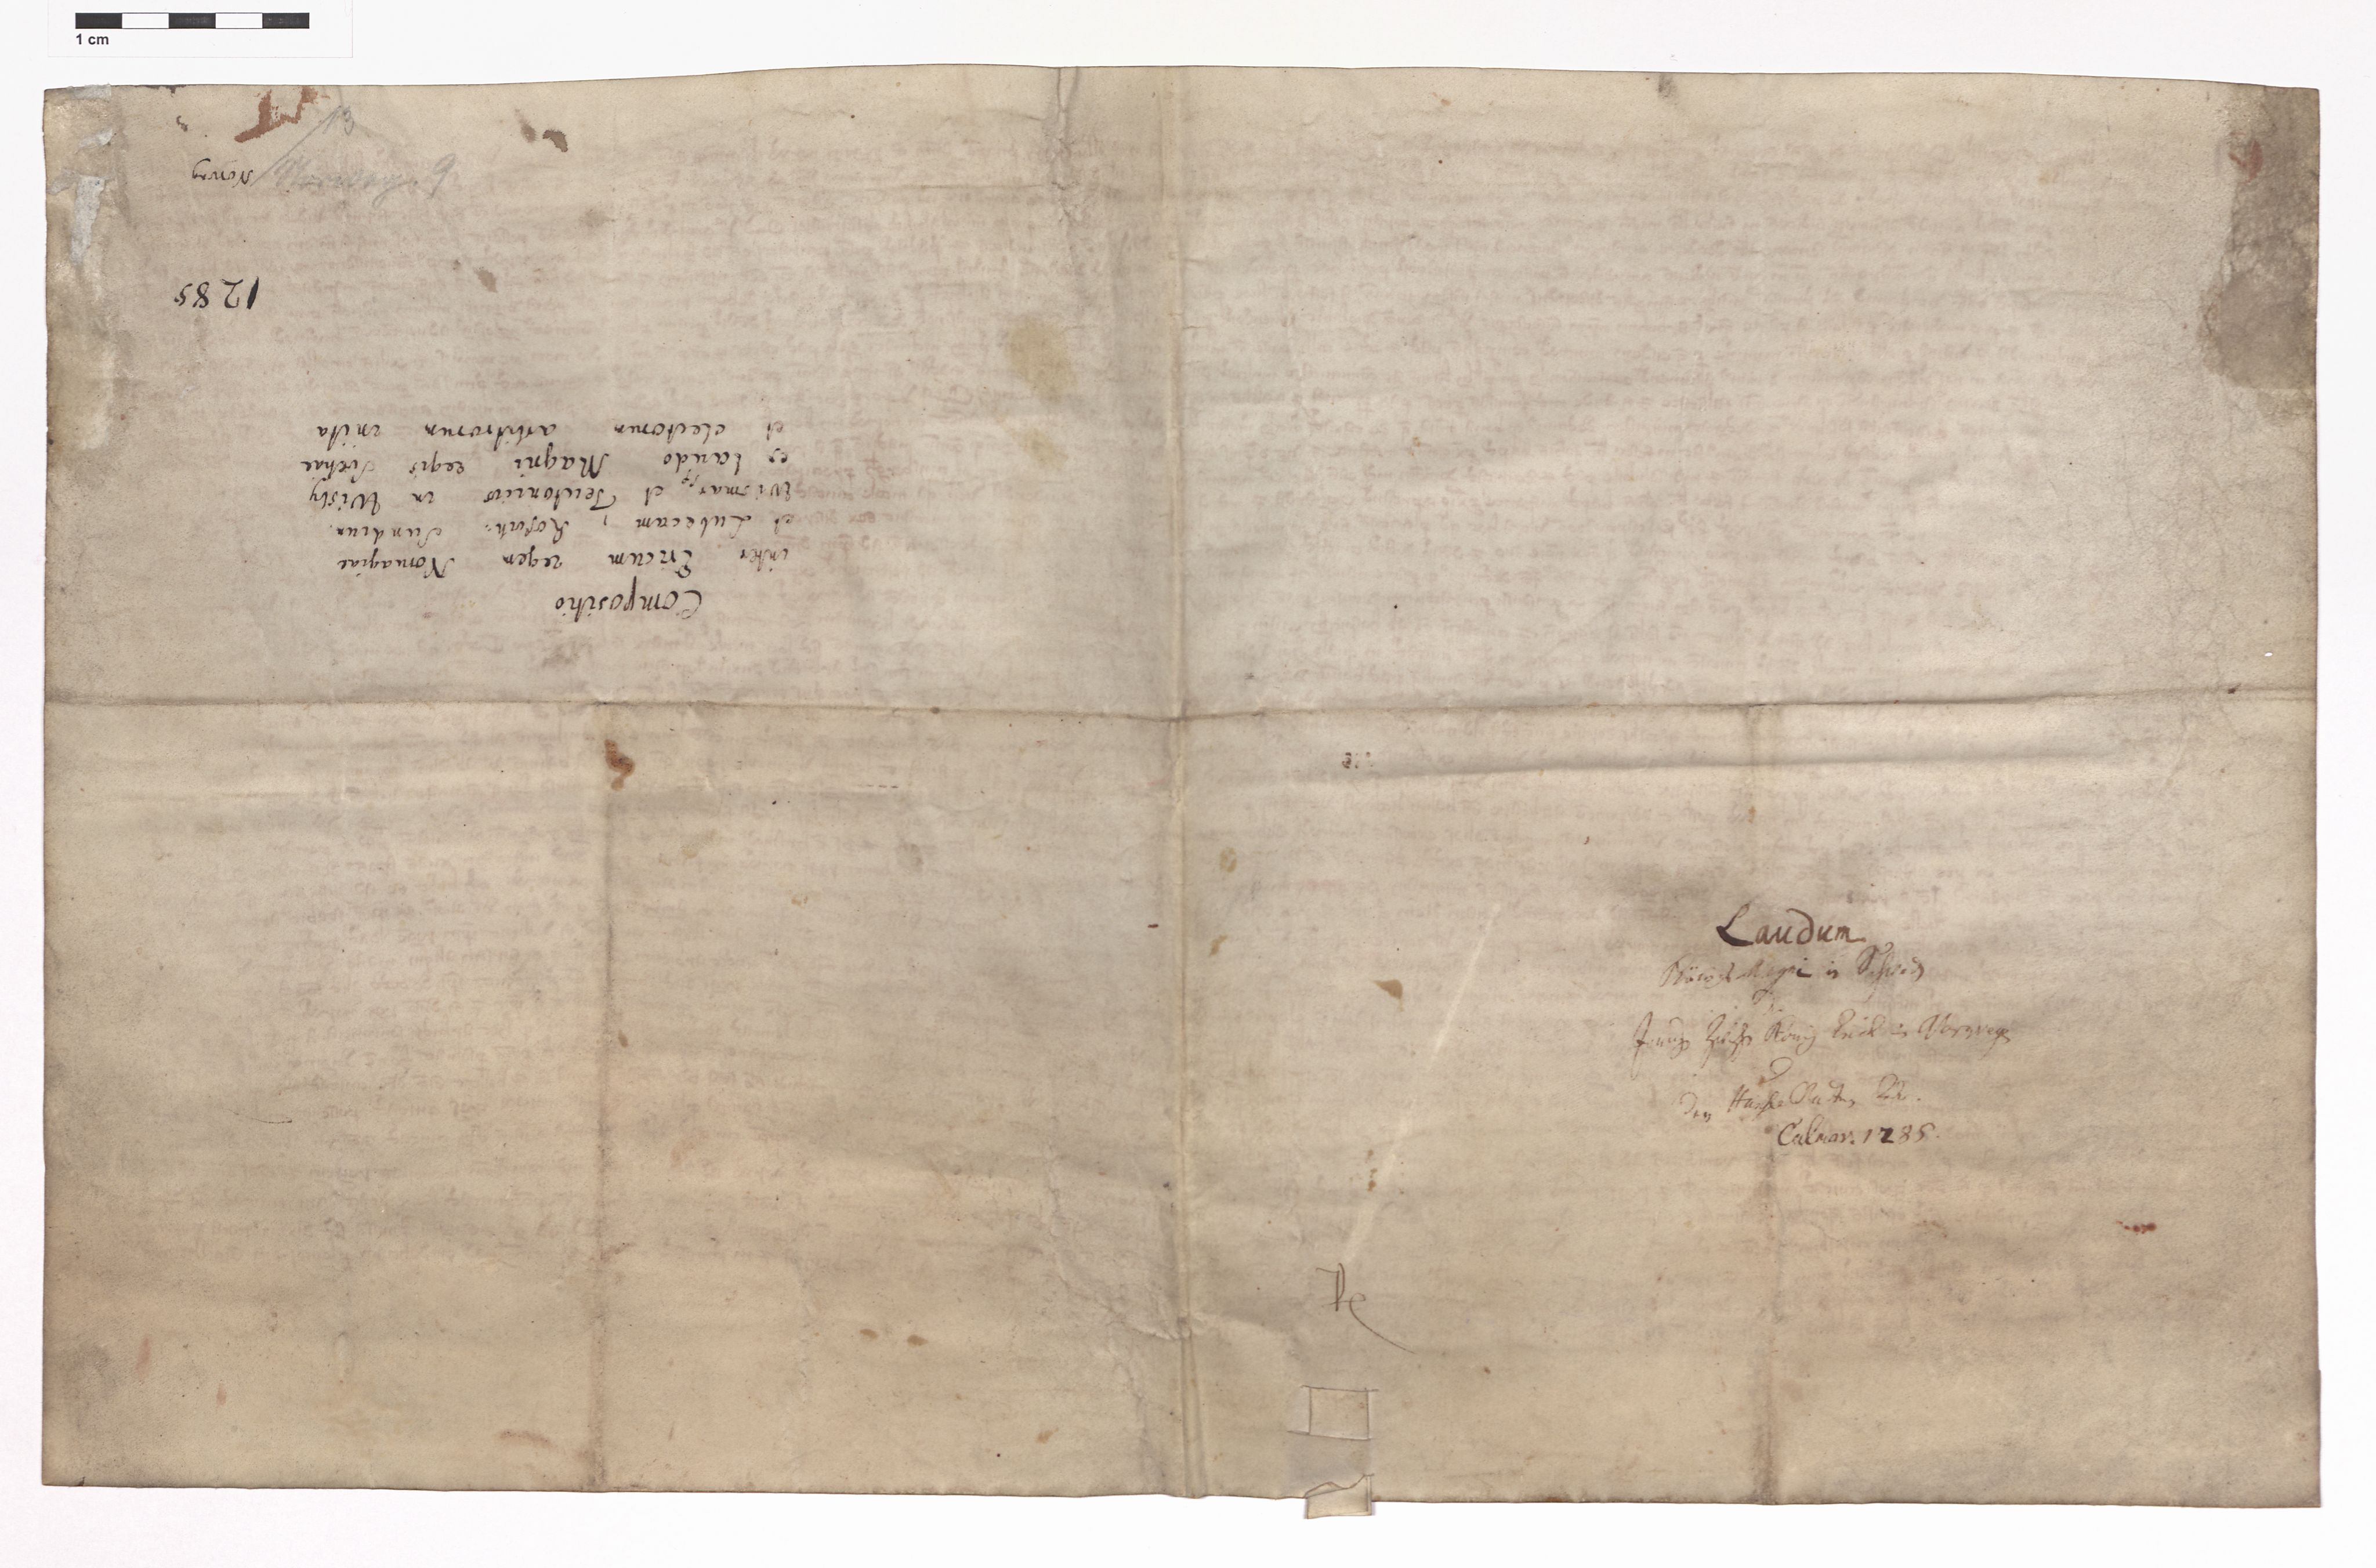 07.1 Urkunden, 3 Auswärtige Beziehungen (Externa), AHL/-/21: Norwegen (Norvagica); Kontor zu Bergen, 1247-1747, s. 73